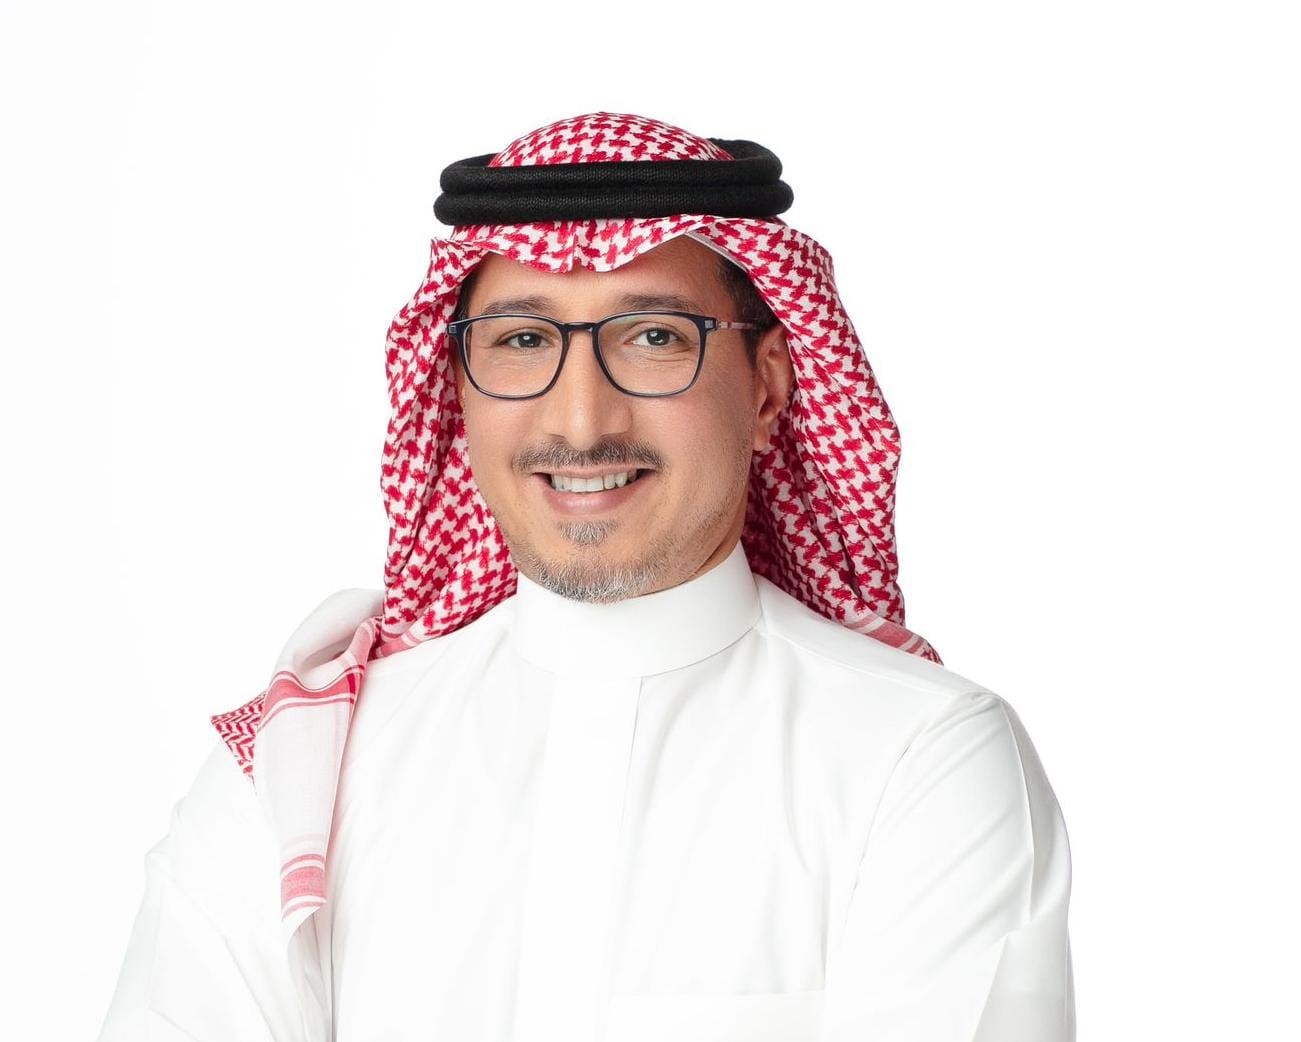 Mohammed bin Aali Al- Otaibi